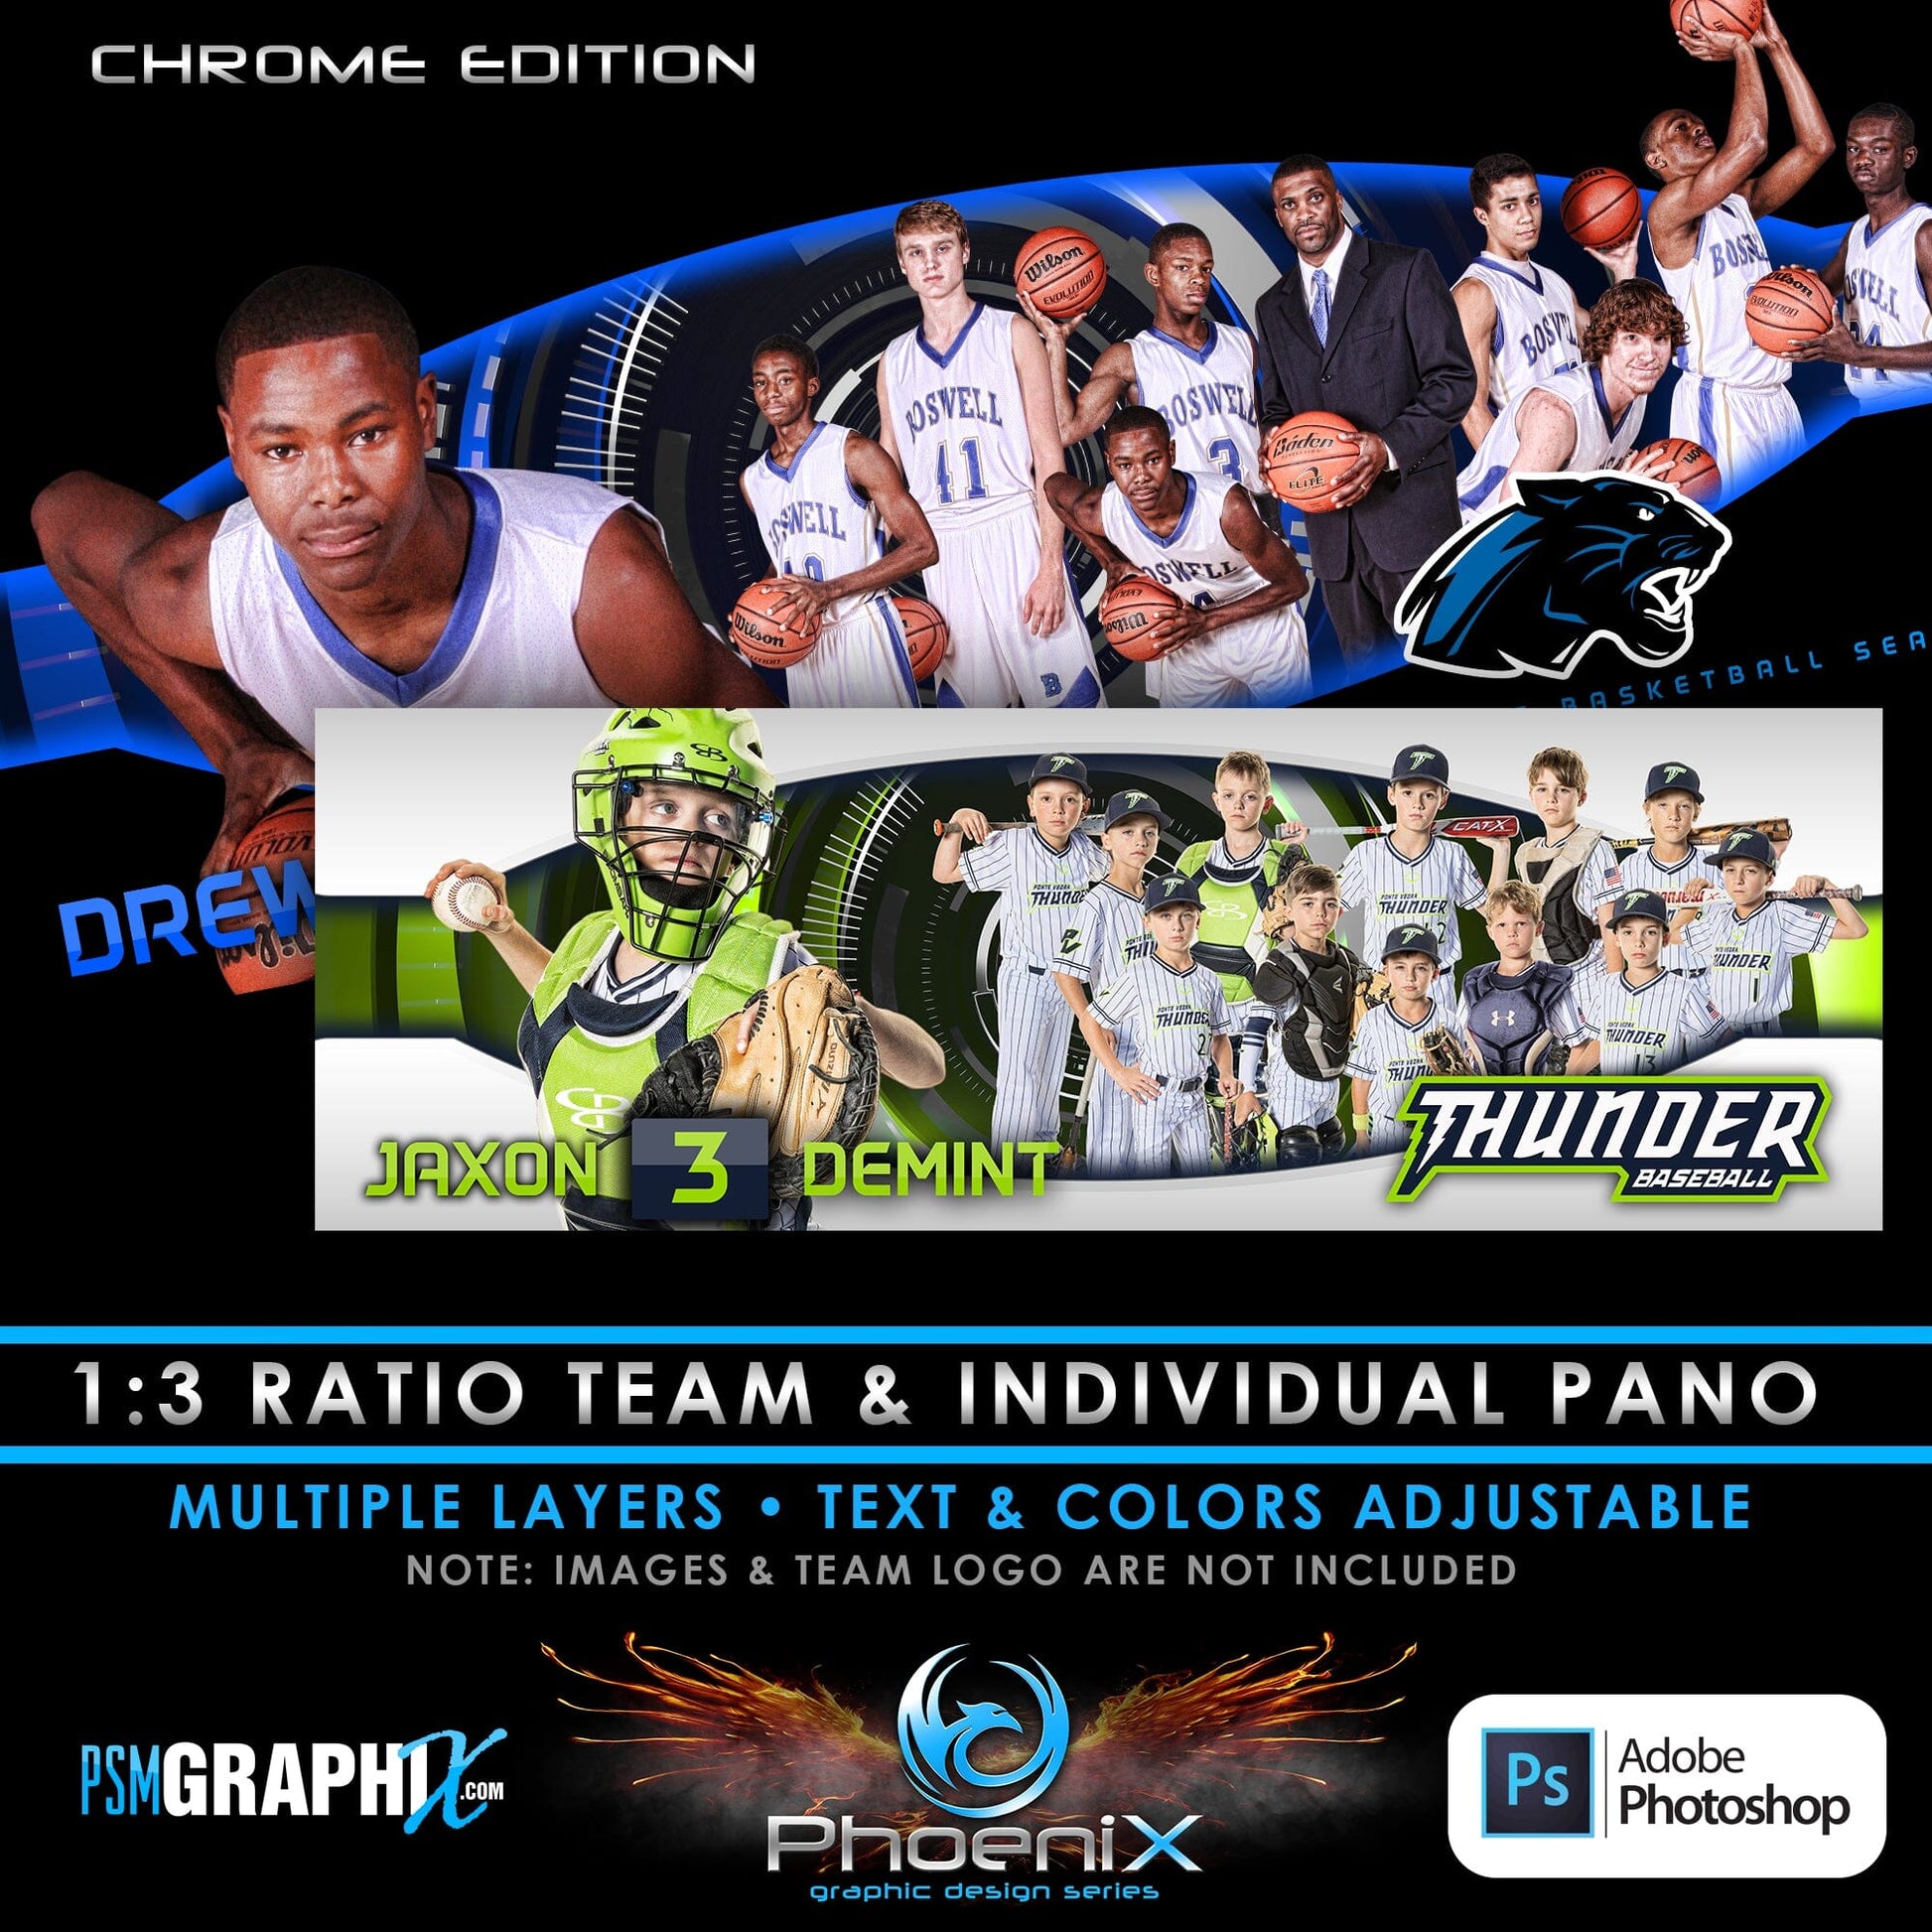 CHROME - Phoenix Series - Team & Individual Panoramic-Photoshop Template - PSMGraphix